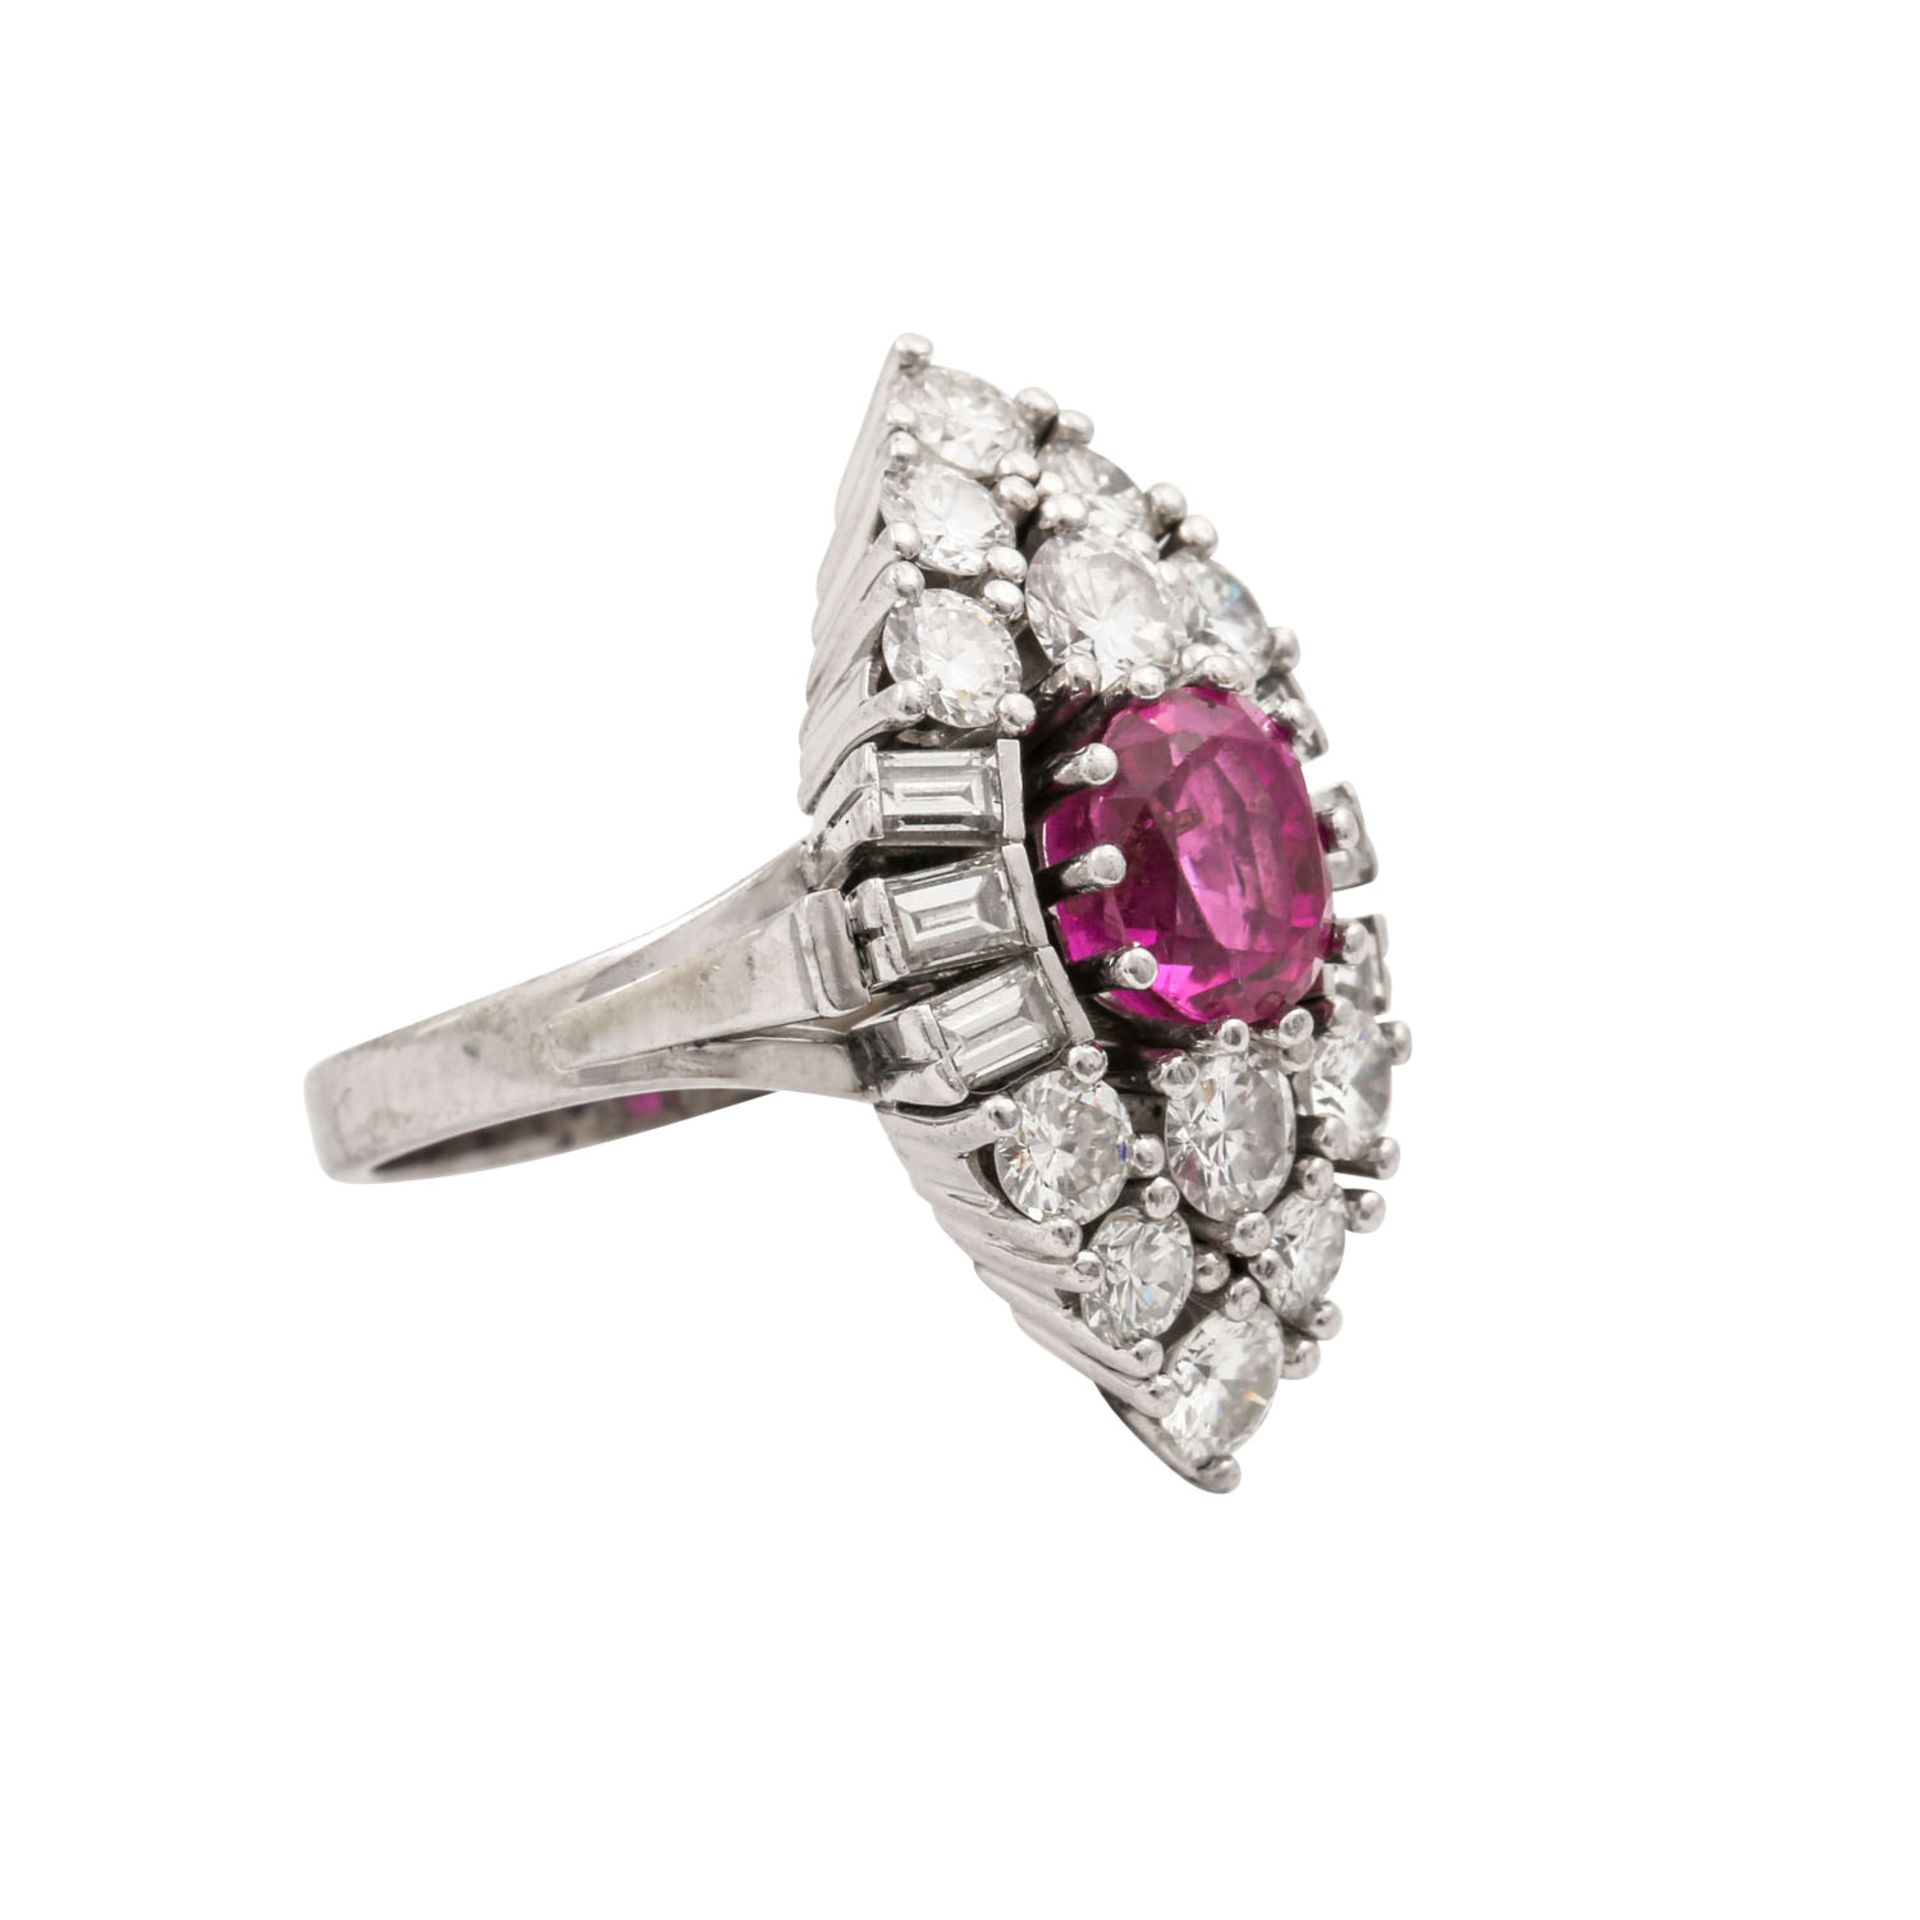 Ring mit pinkfarbenem Saphir ca. 2,5 ct, Brillanten zus. ca. 1,5 ct und Diamantbaguett